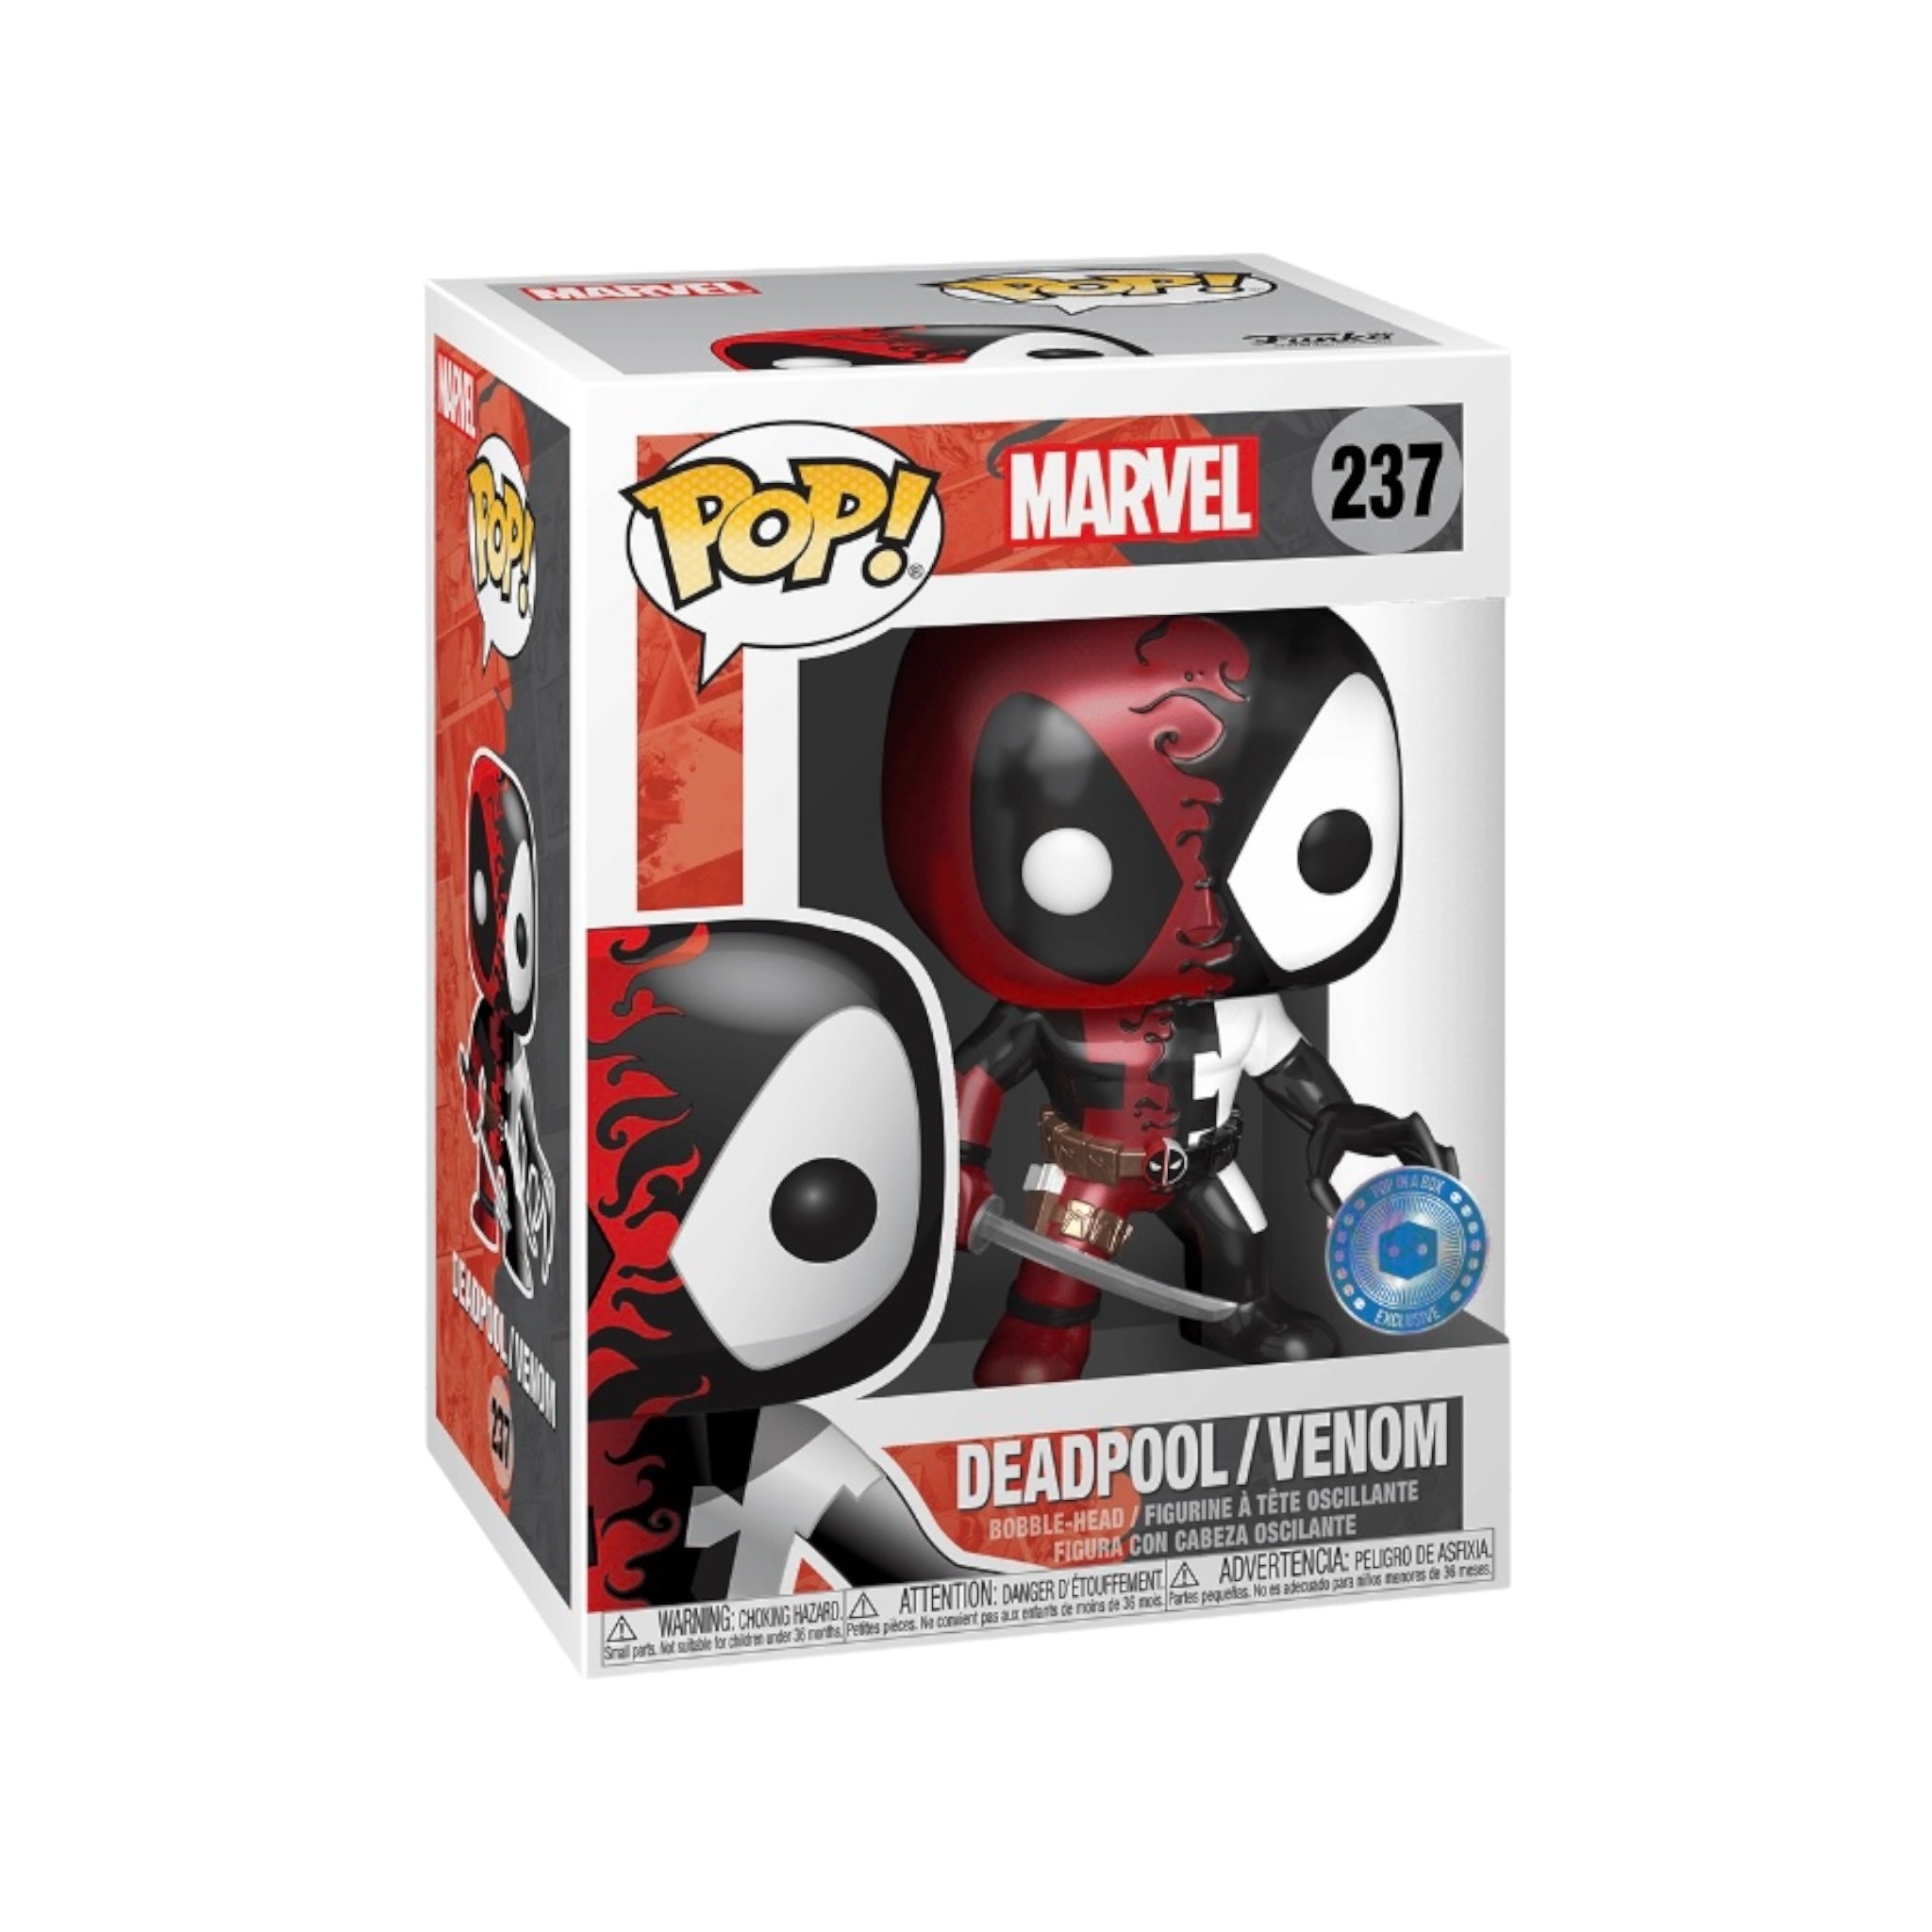 Deadpool / Venom #237 (Metallic) Funko Pop! - Marvel - Pop In A Box Exclusive